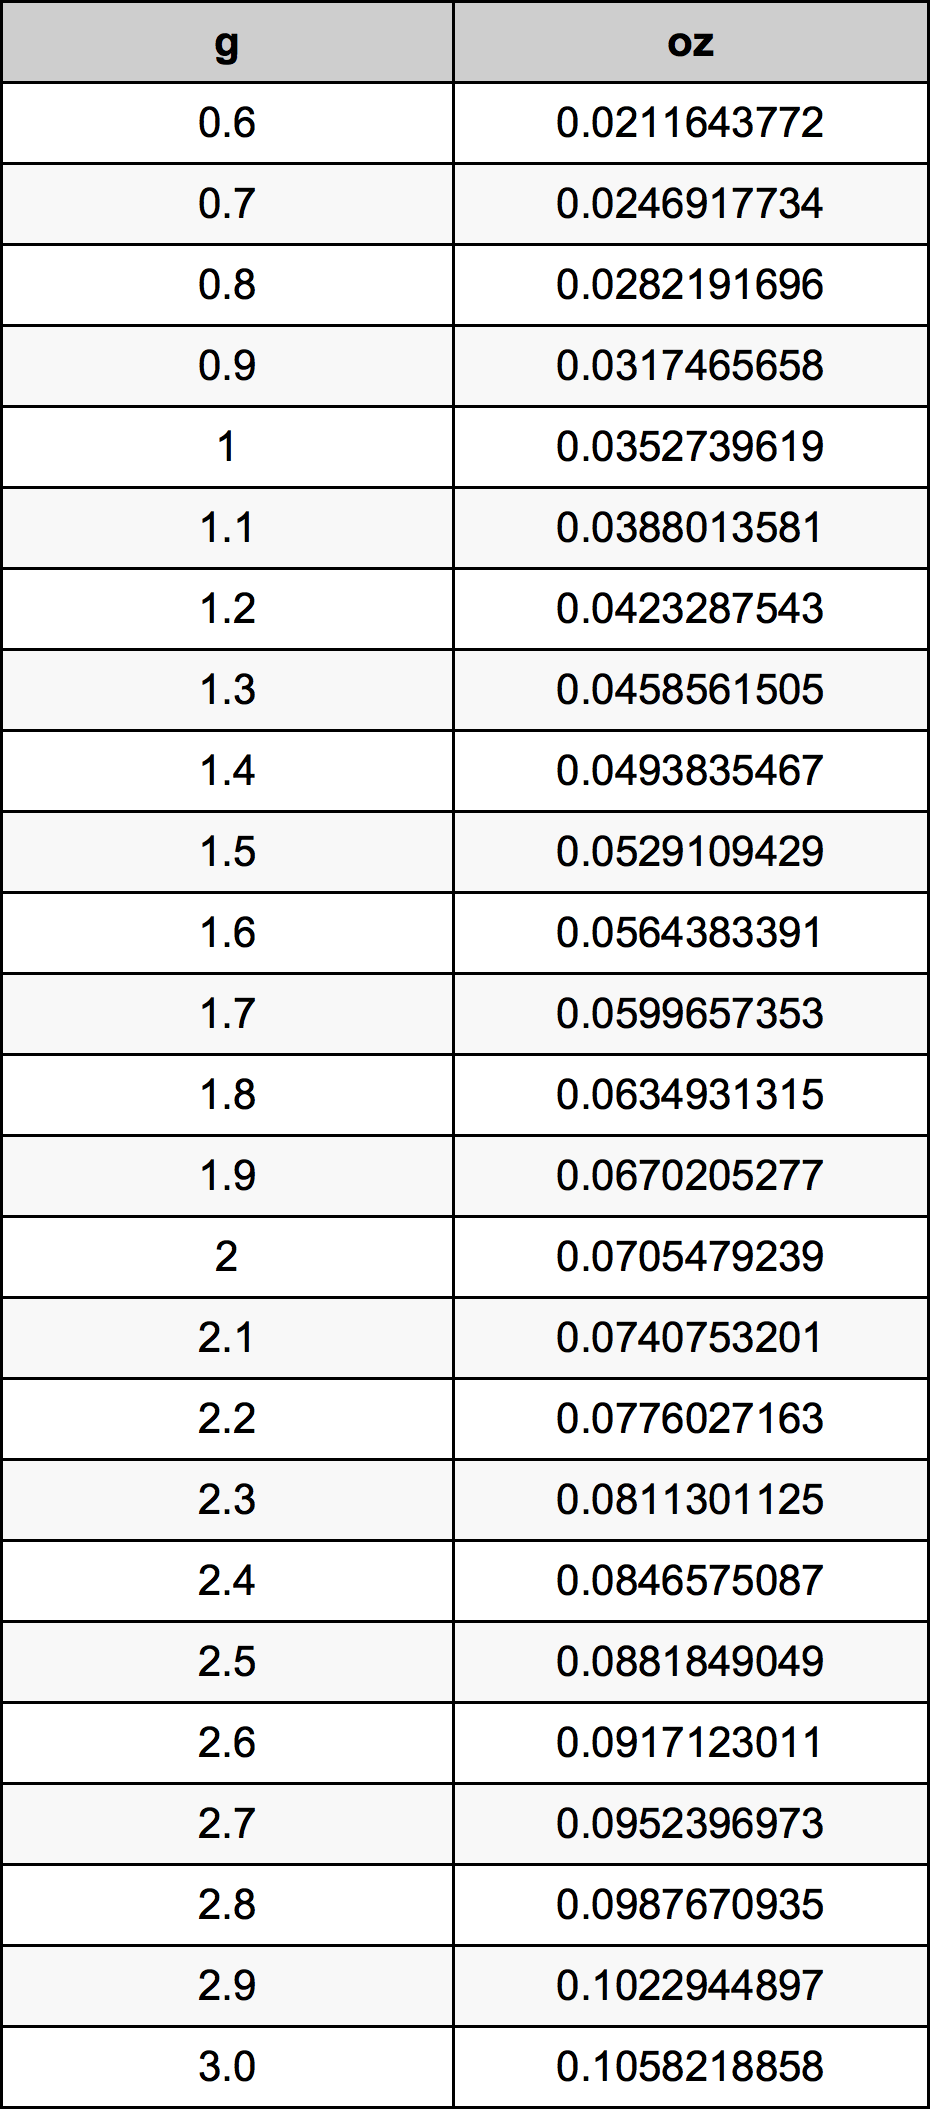 1.8 غرام جدول تحويل